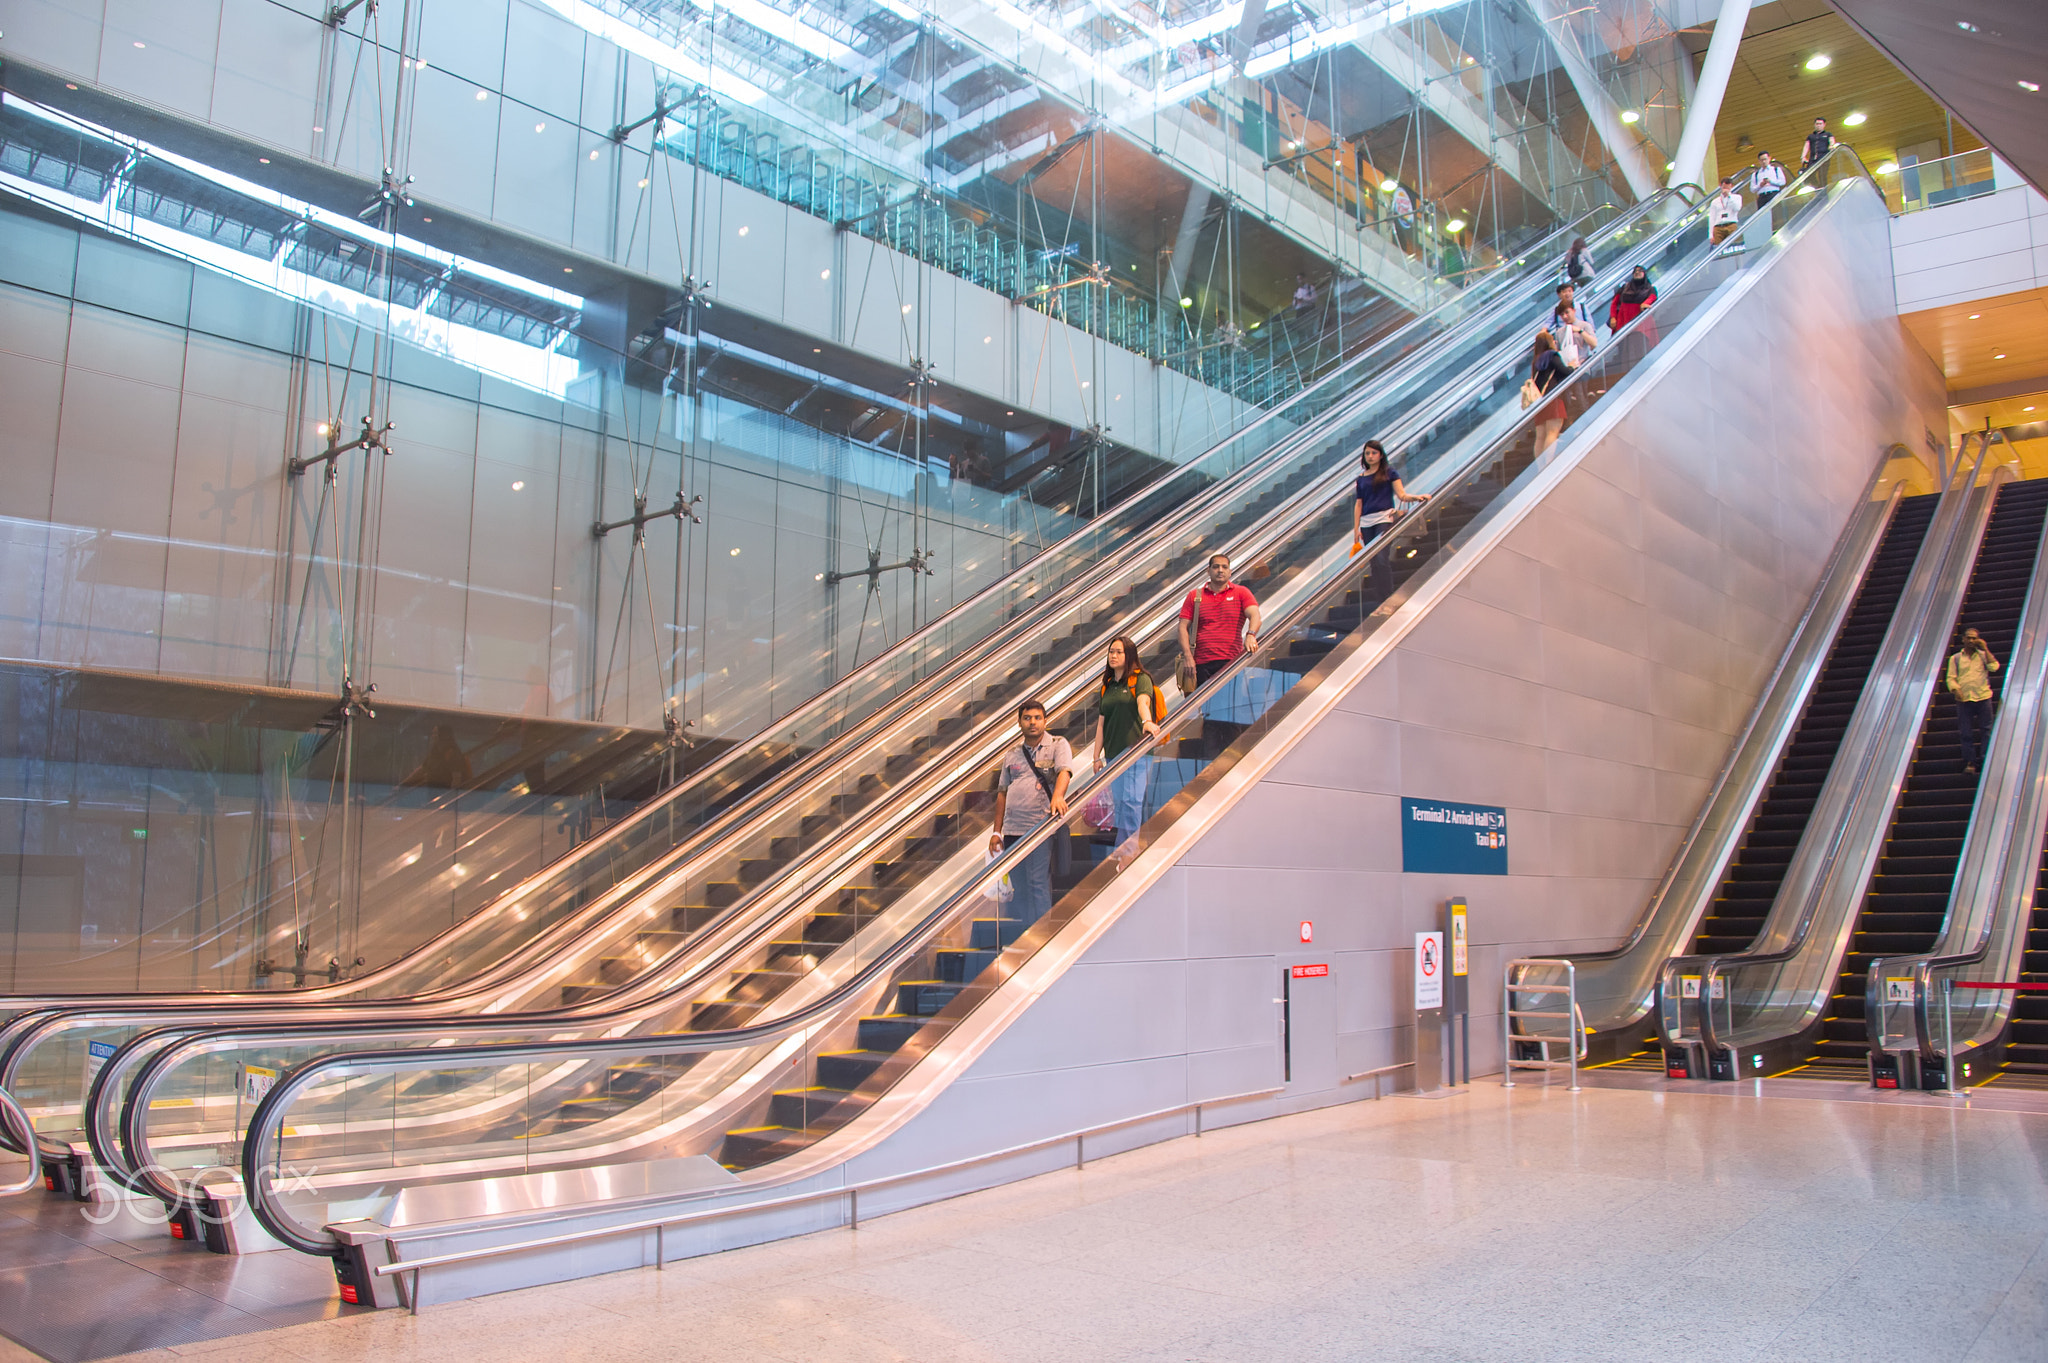 Escalators at Changi Airport, Singapore